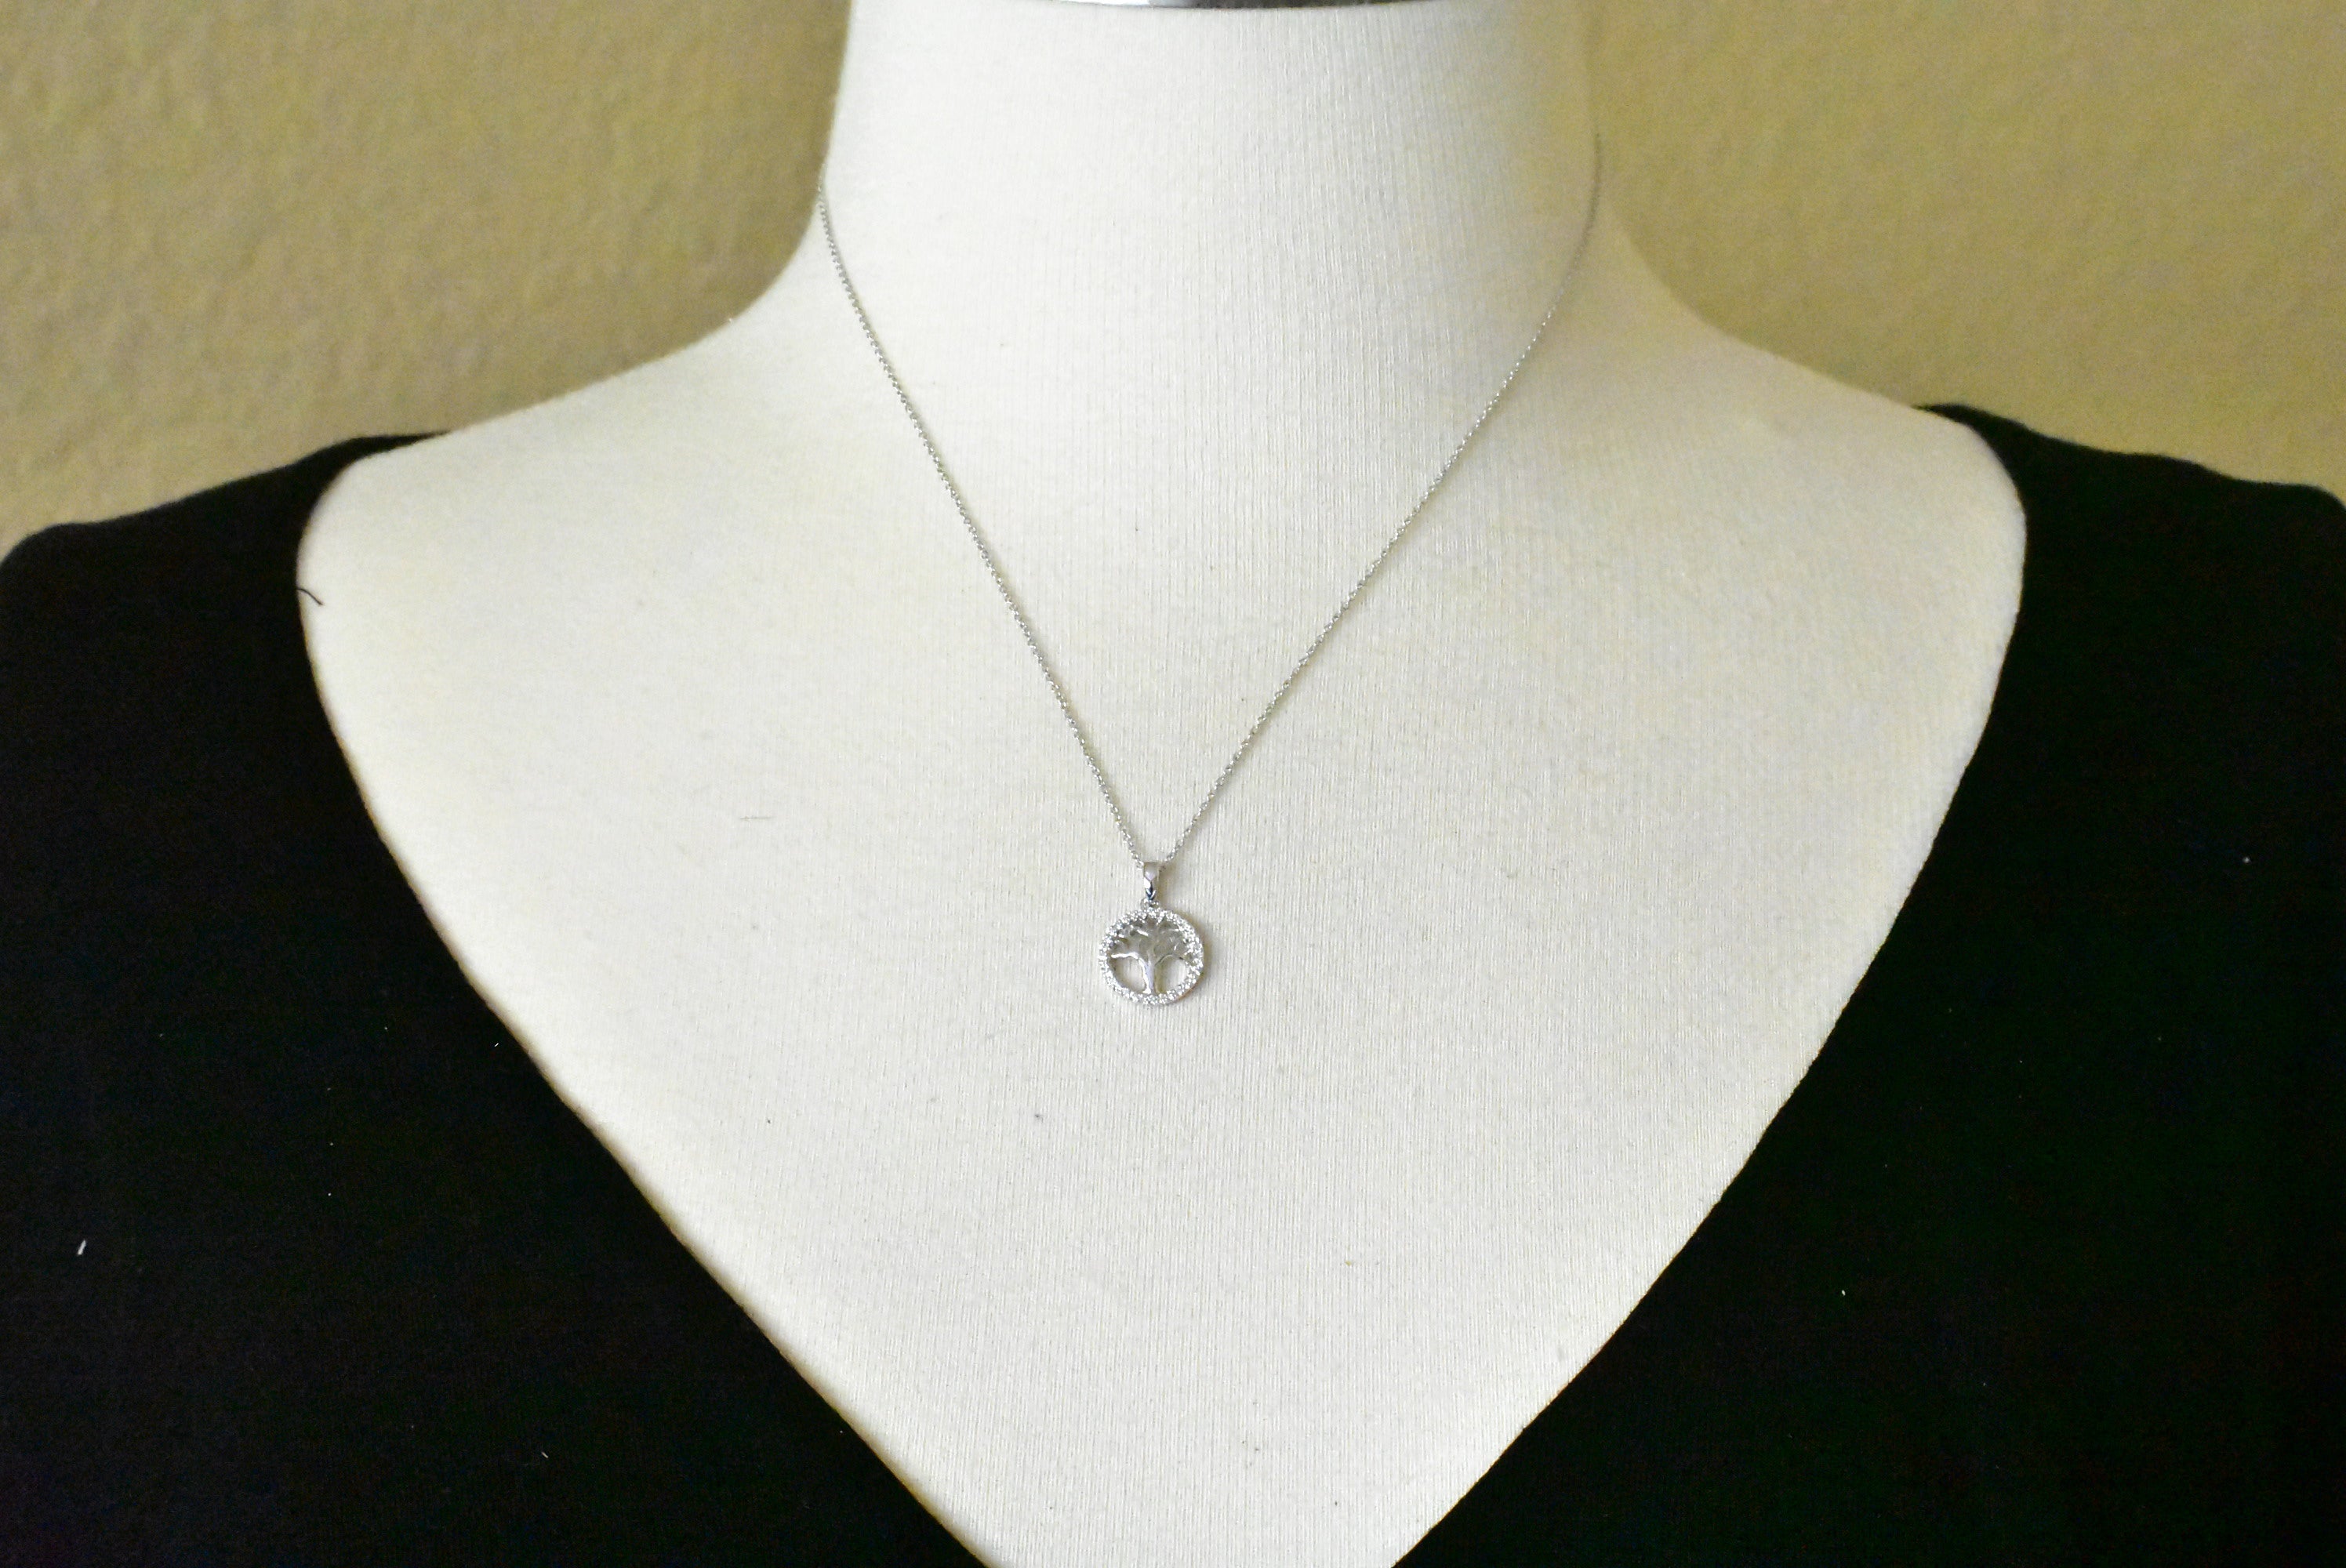 14K White Gold 1/5 CTW Diamond Tree of Life Pendant Charm Necklace